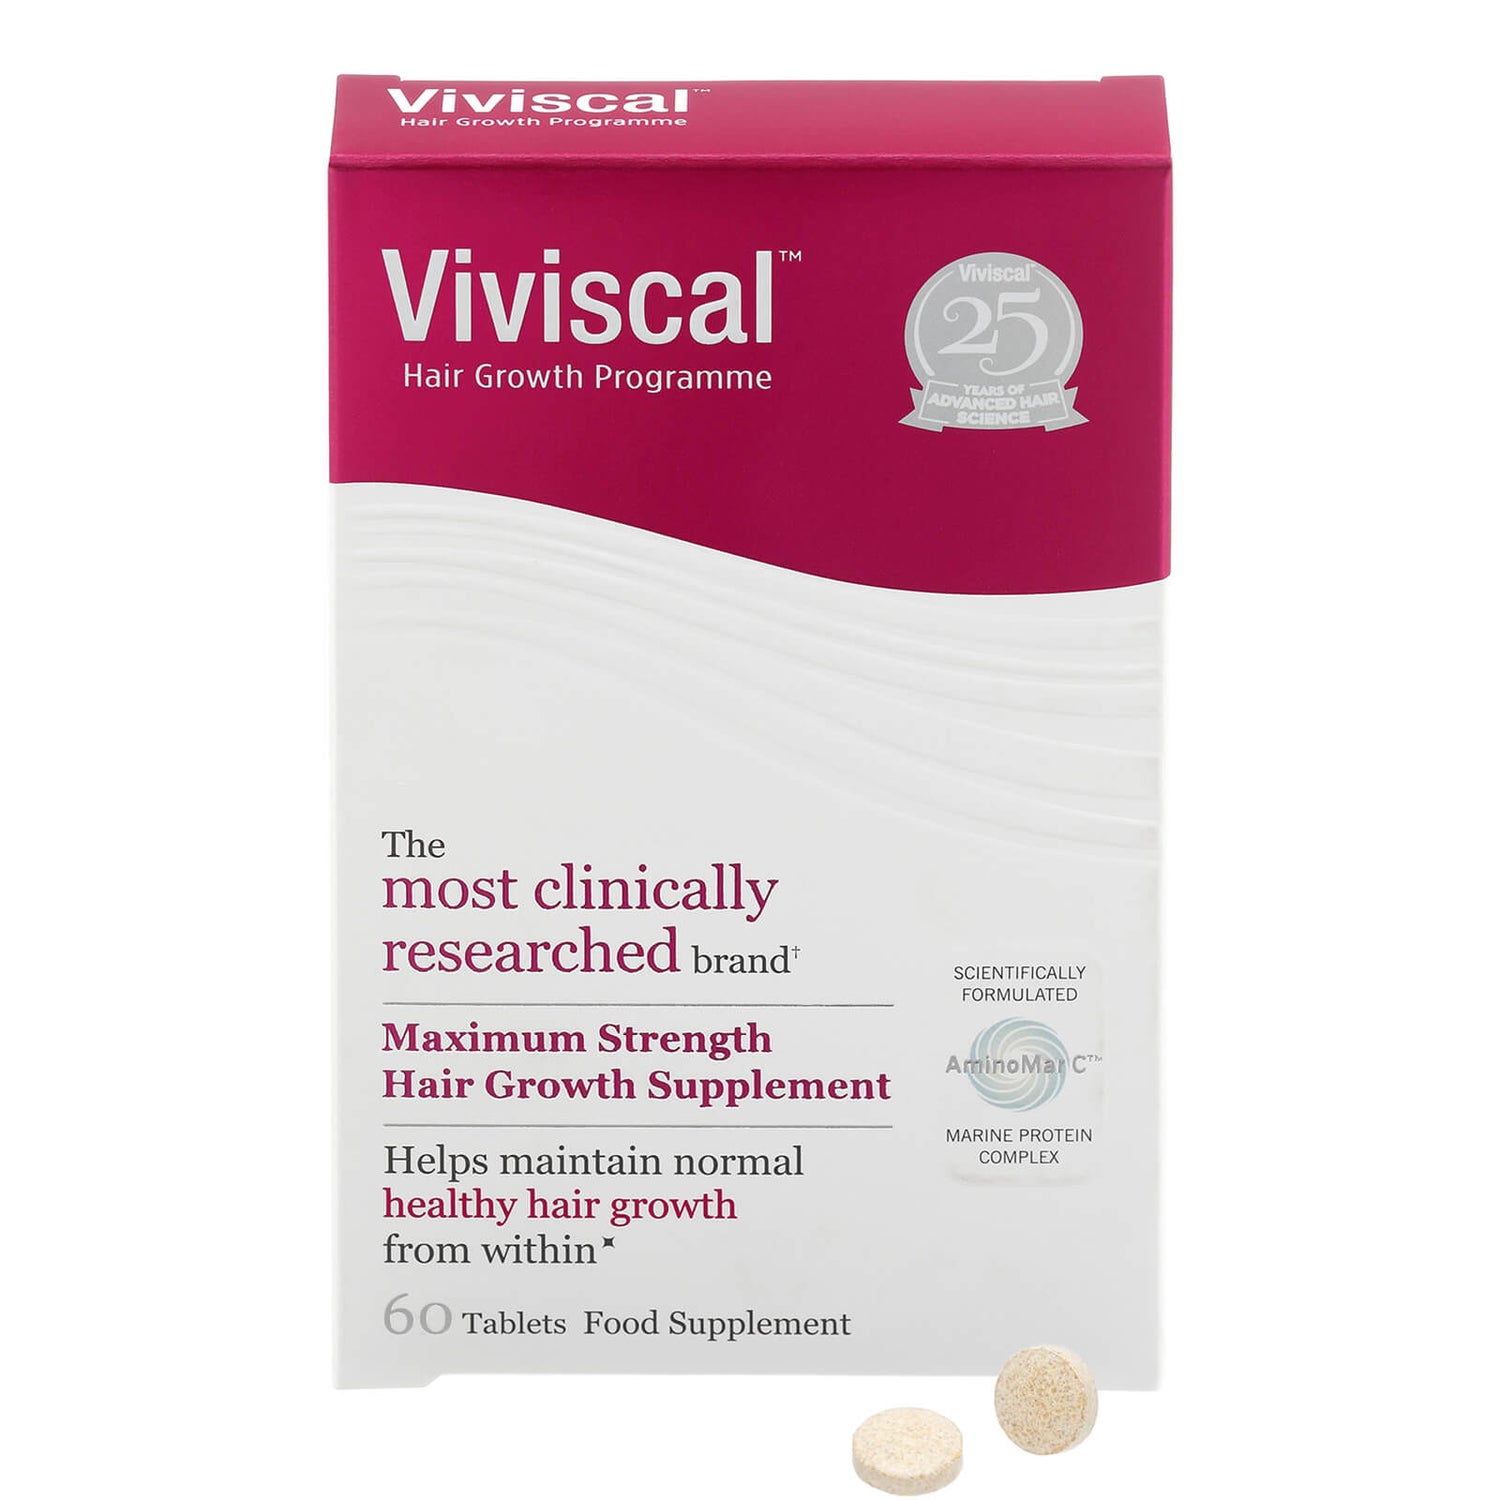 Share 72+ viviscal hair growth supplements best